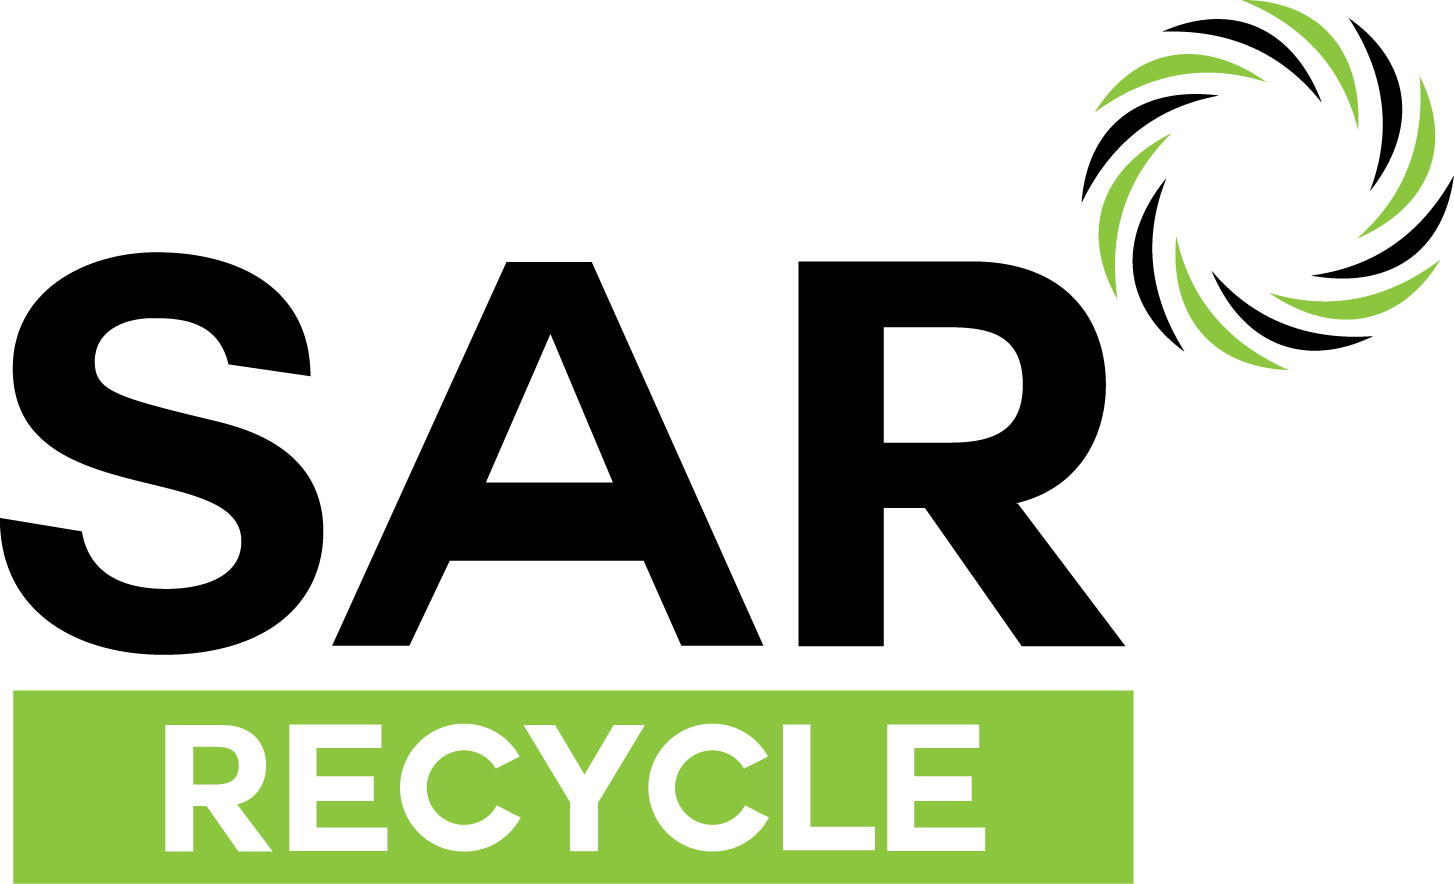 SAR Logo - Edge Launch new corporate website for SAR Group